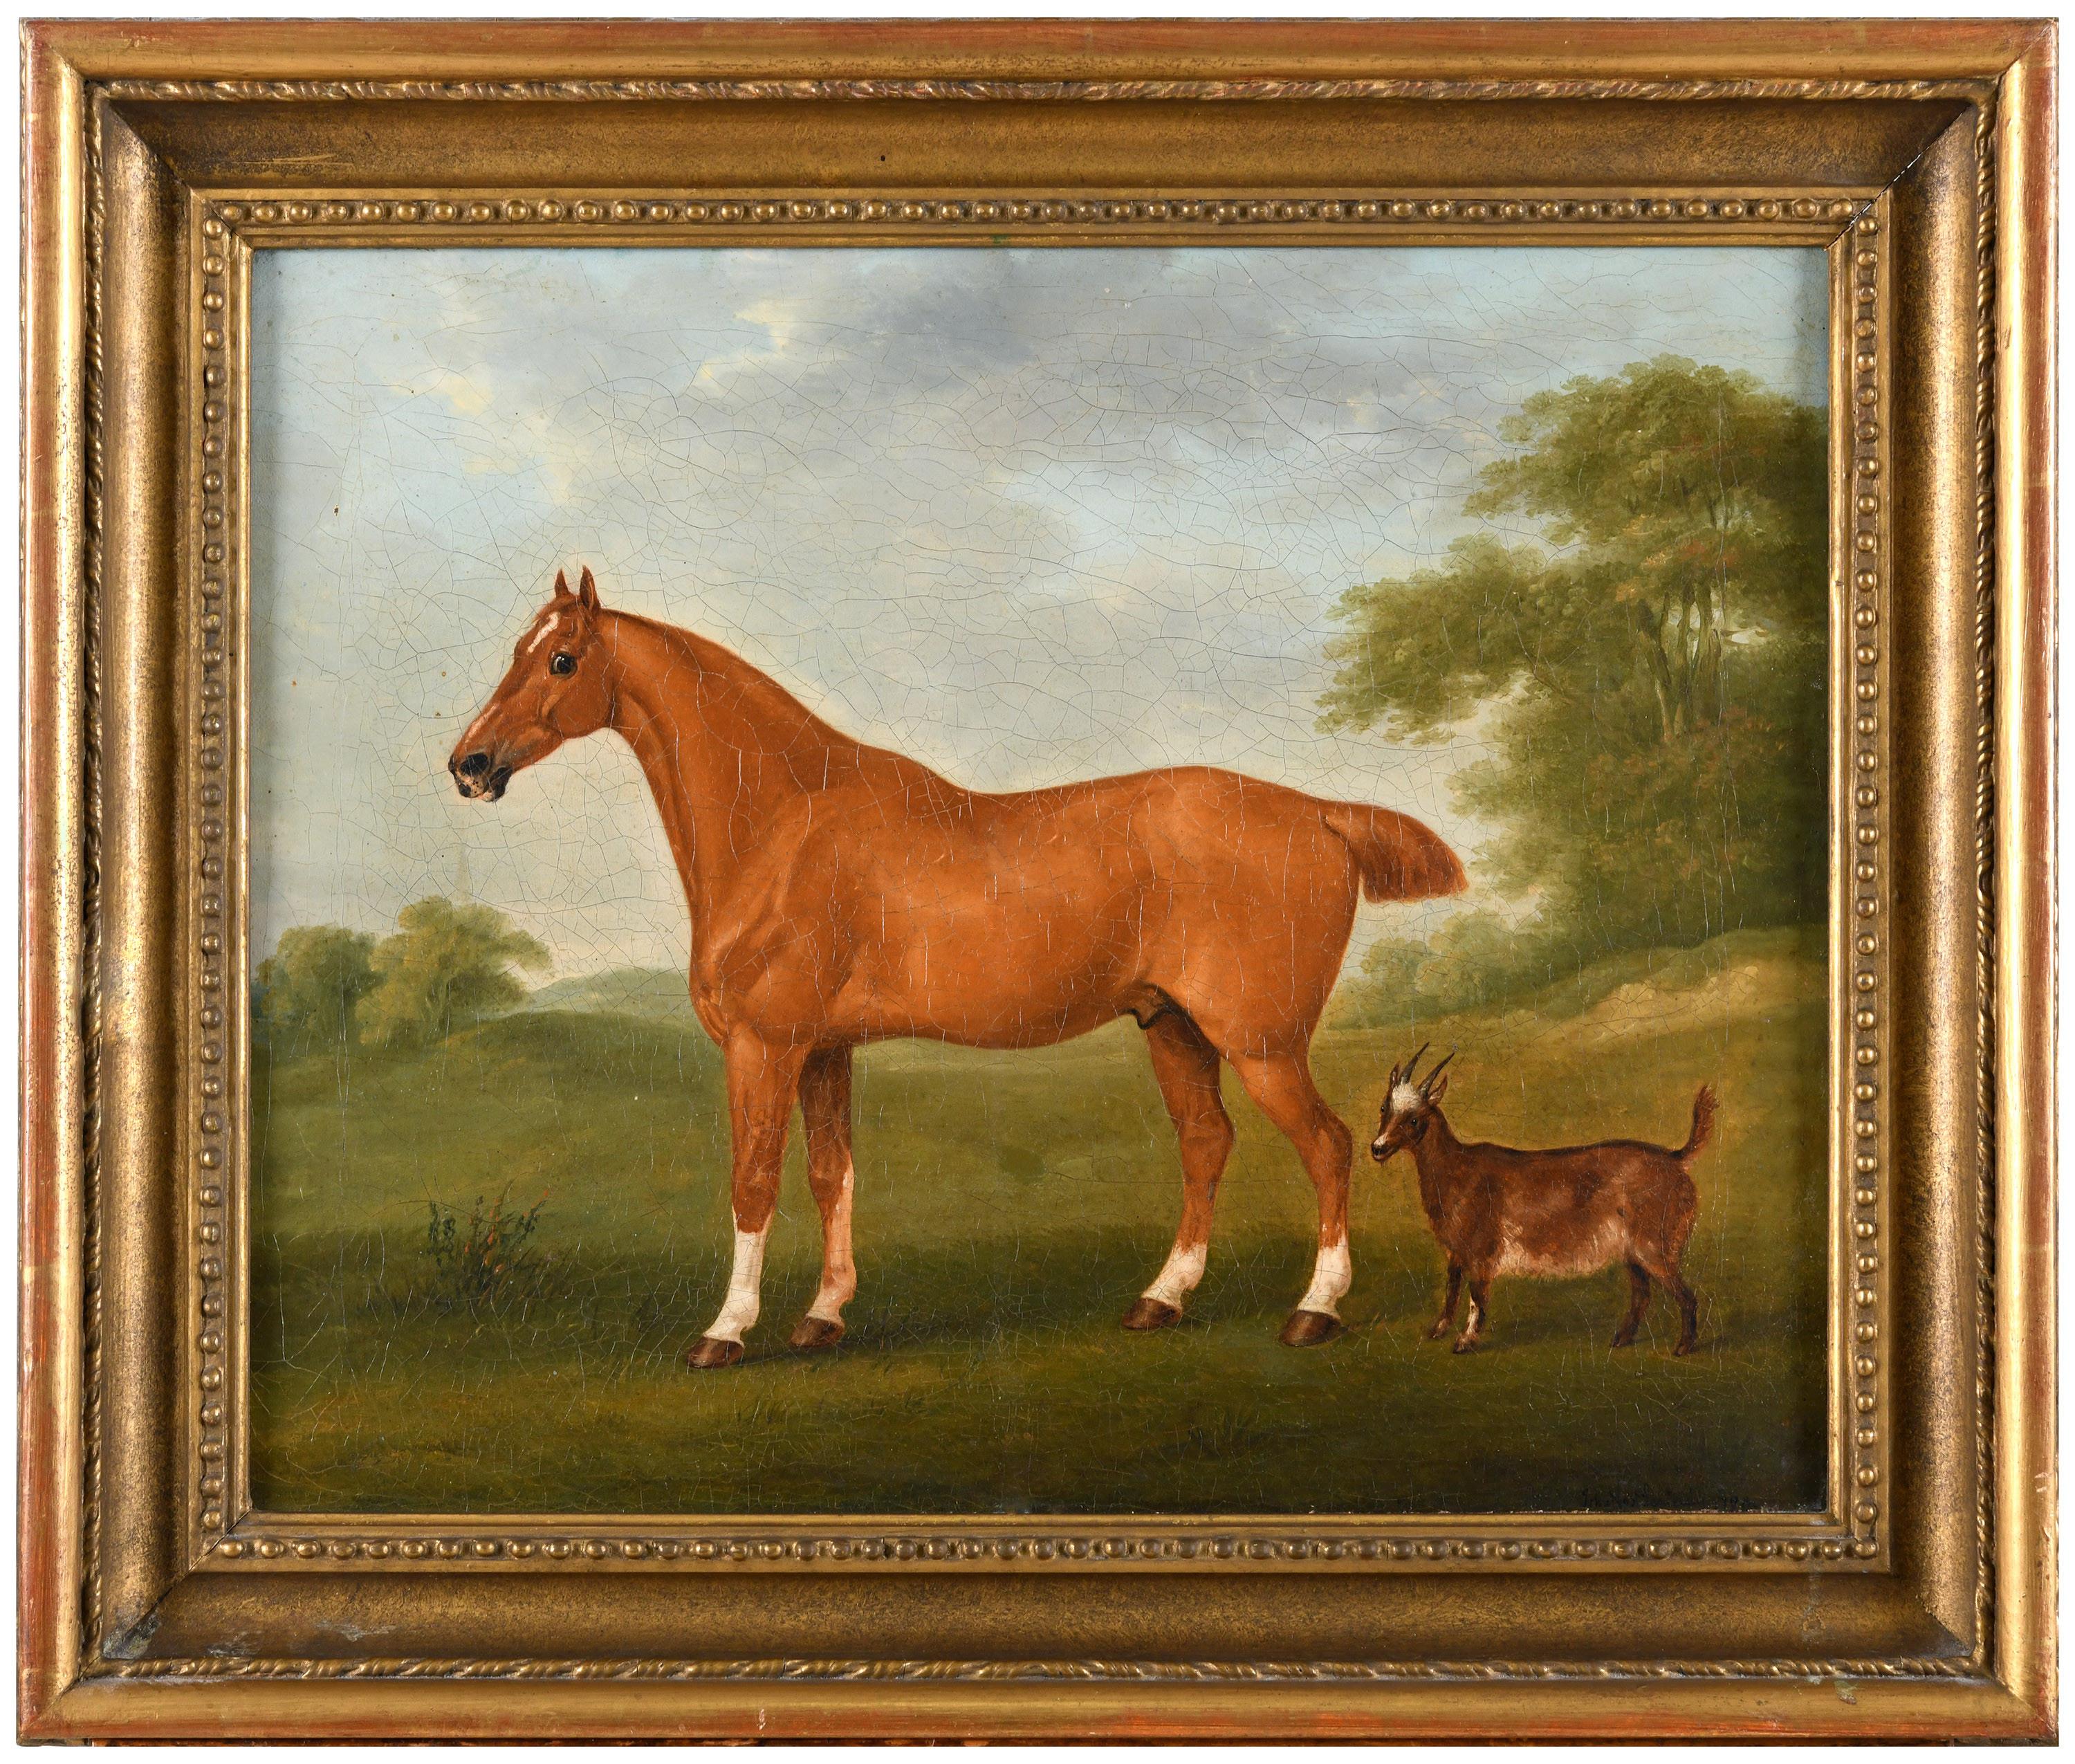 John Nost Sartorius Portrait Painting - A chestnut horse and a goat in a landscape 